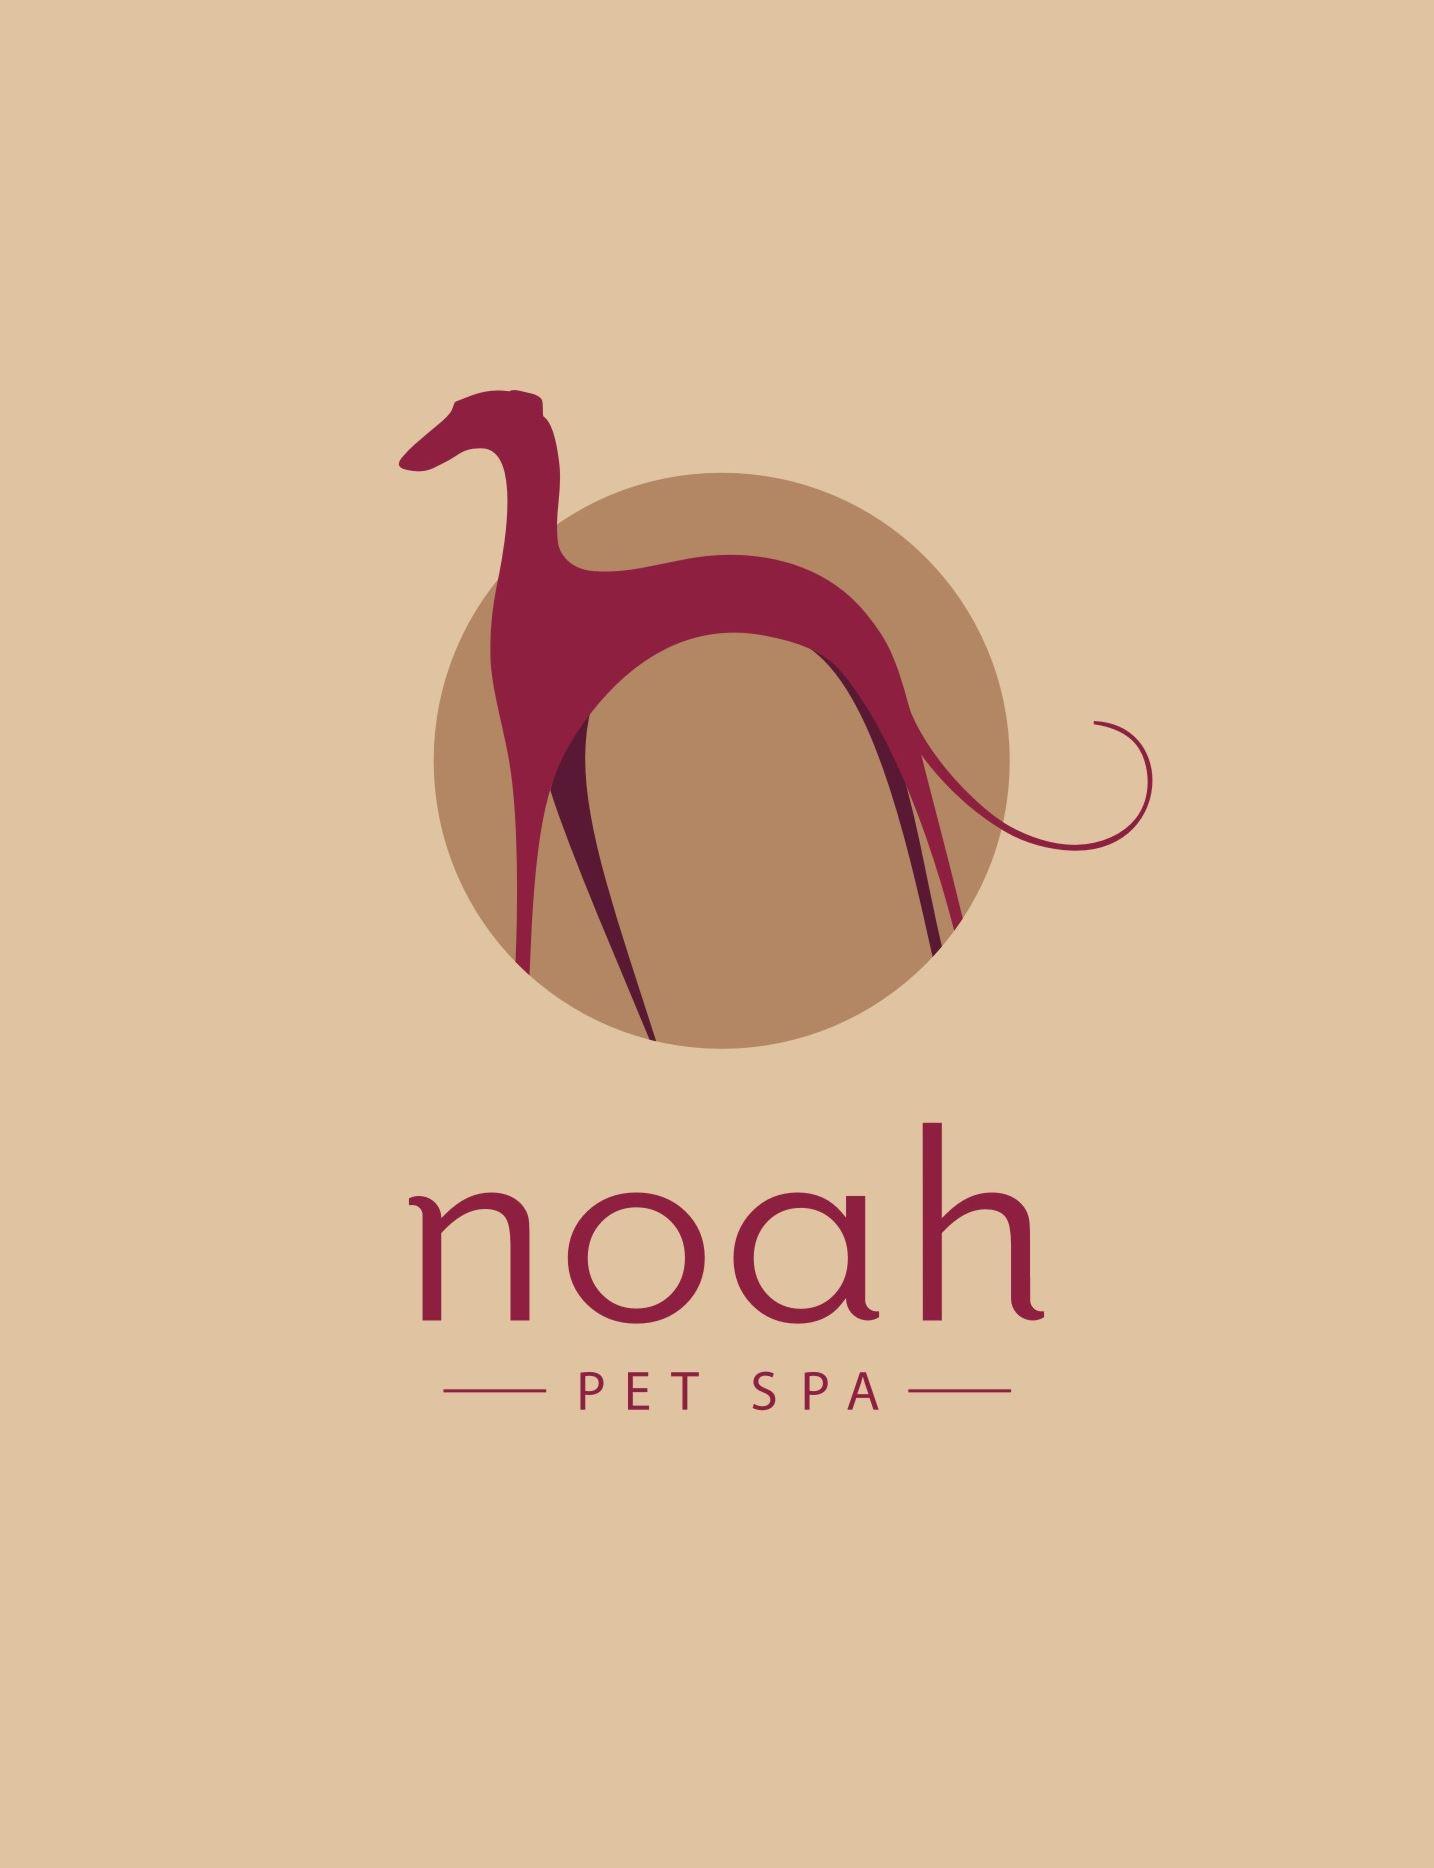 Noah Pet Spa